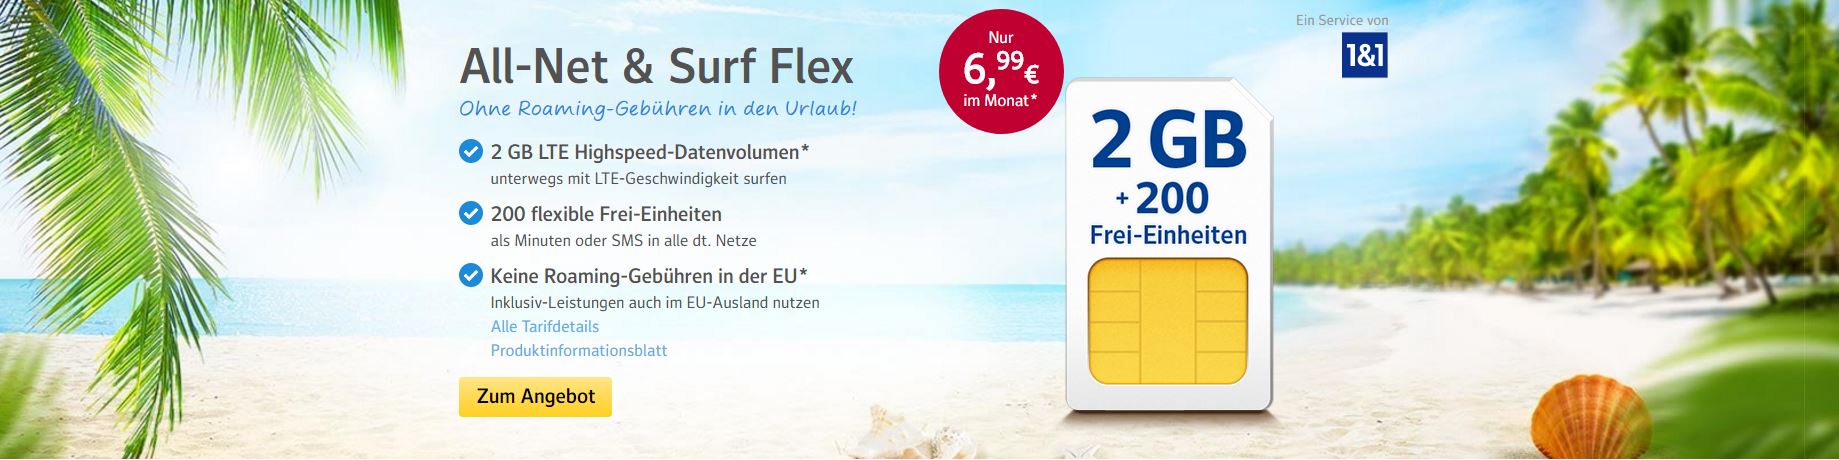 Handytarife Angebote - Allnet & Surf Flex